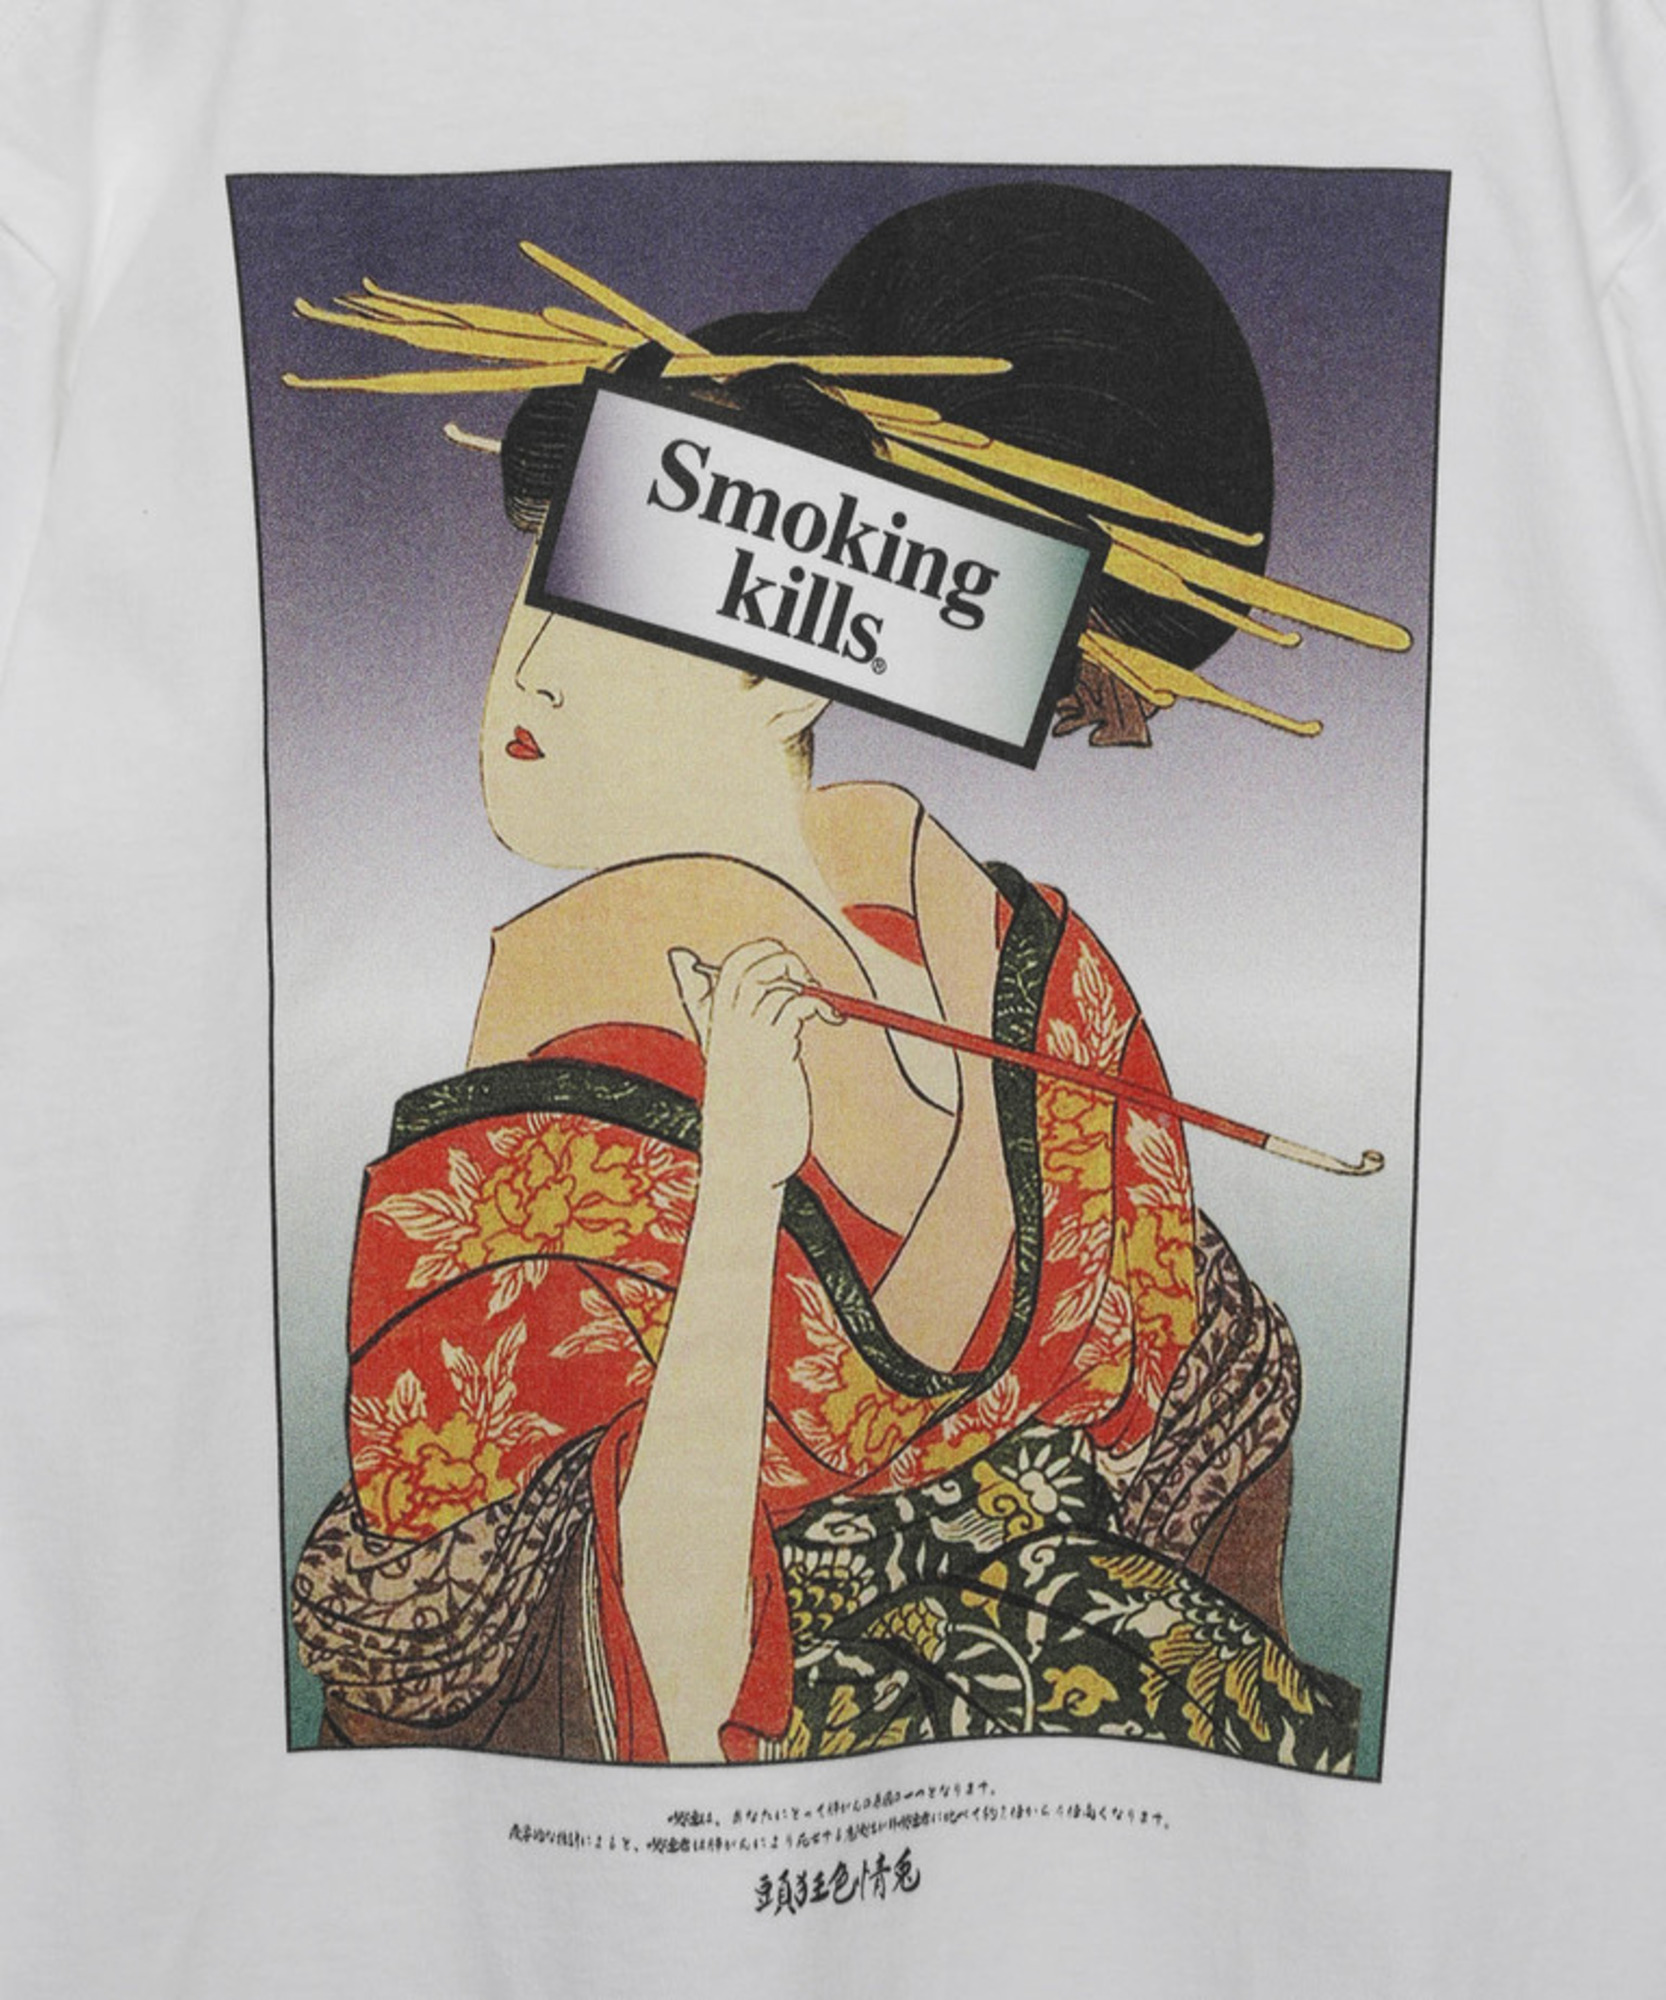 FR2 Ukiyoe Smokingkills Tシャツ